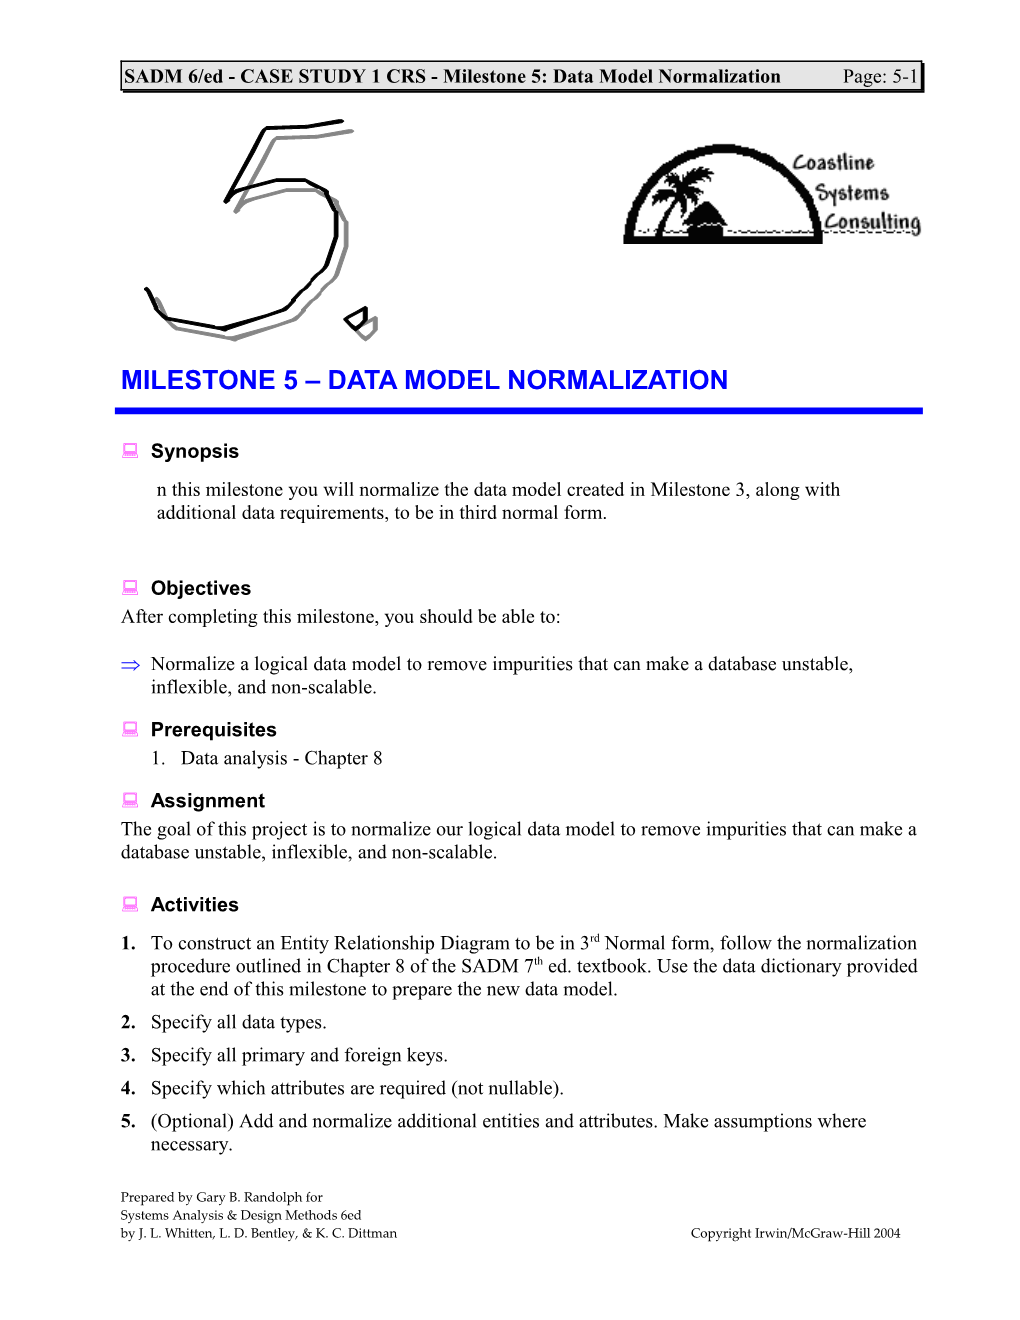 SADM 6/Ed - CASE STUDY 1 CRS - Milestone 5: Data Model Normalization Page: 5-1